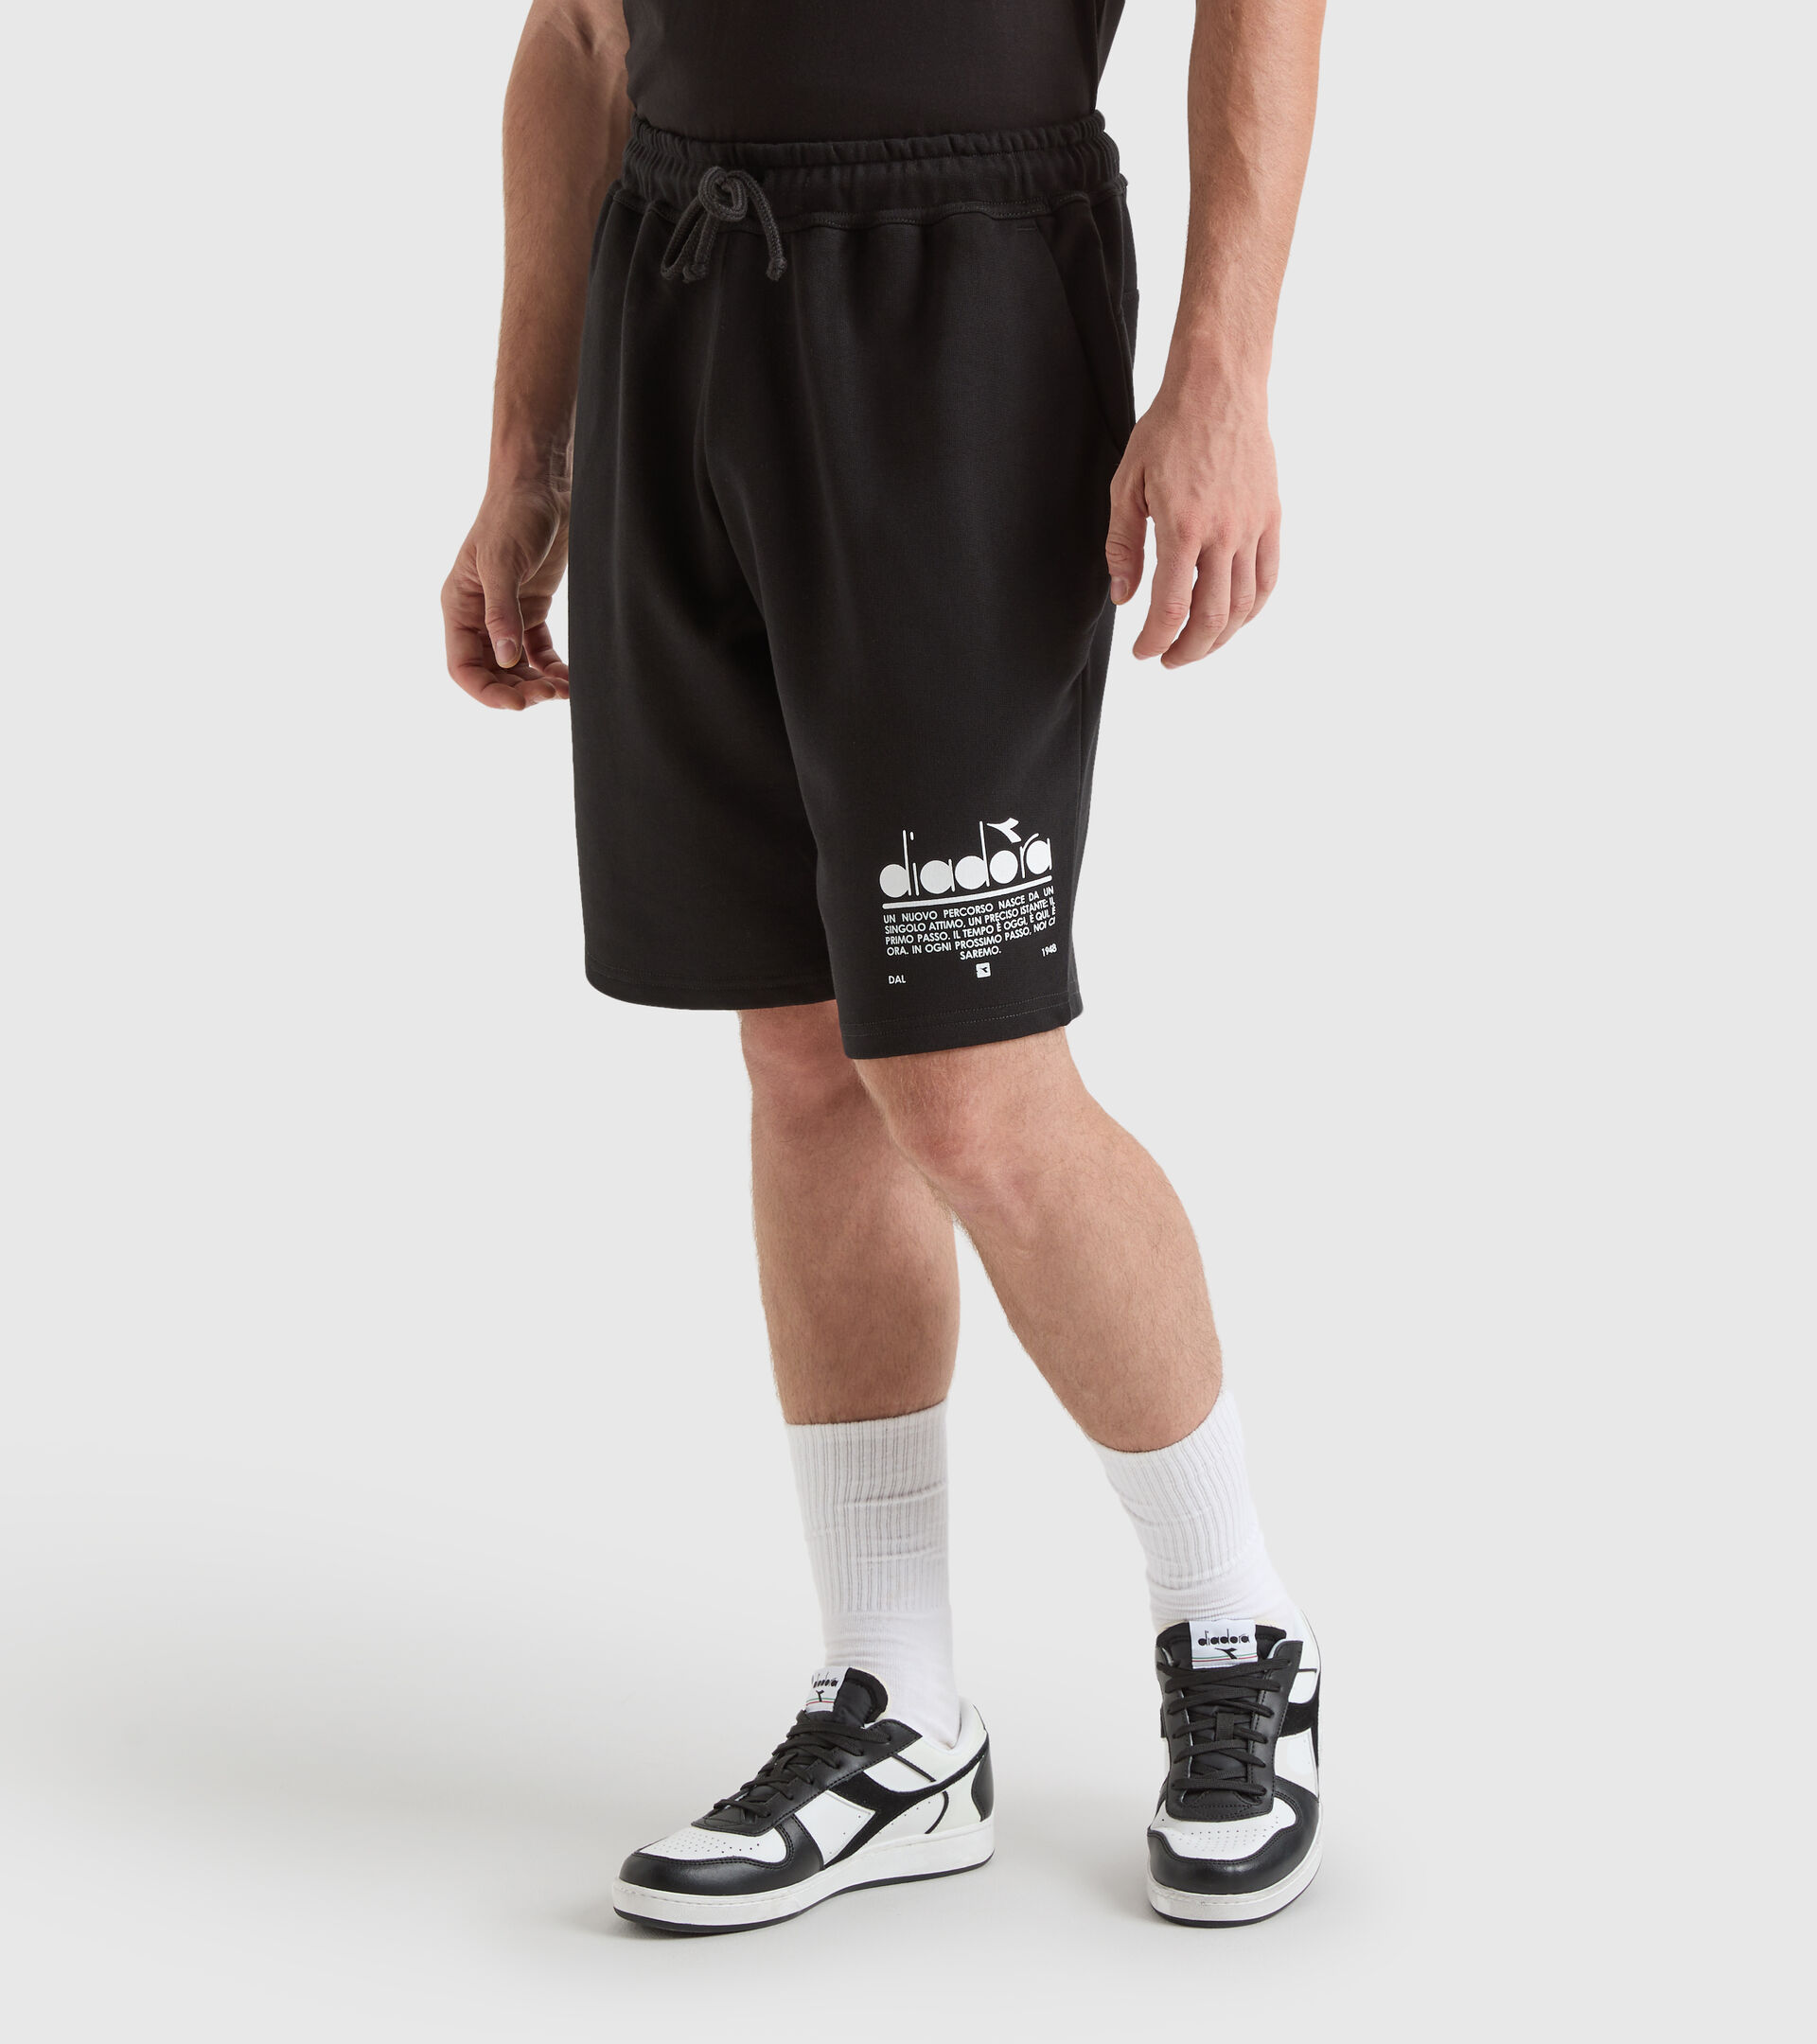 Cotton shorts - Unisex BERMUDA MANIFESTO BLACK - Diadora